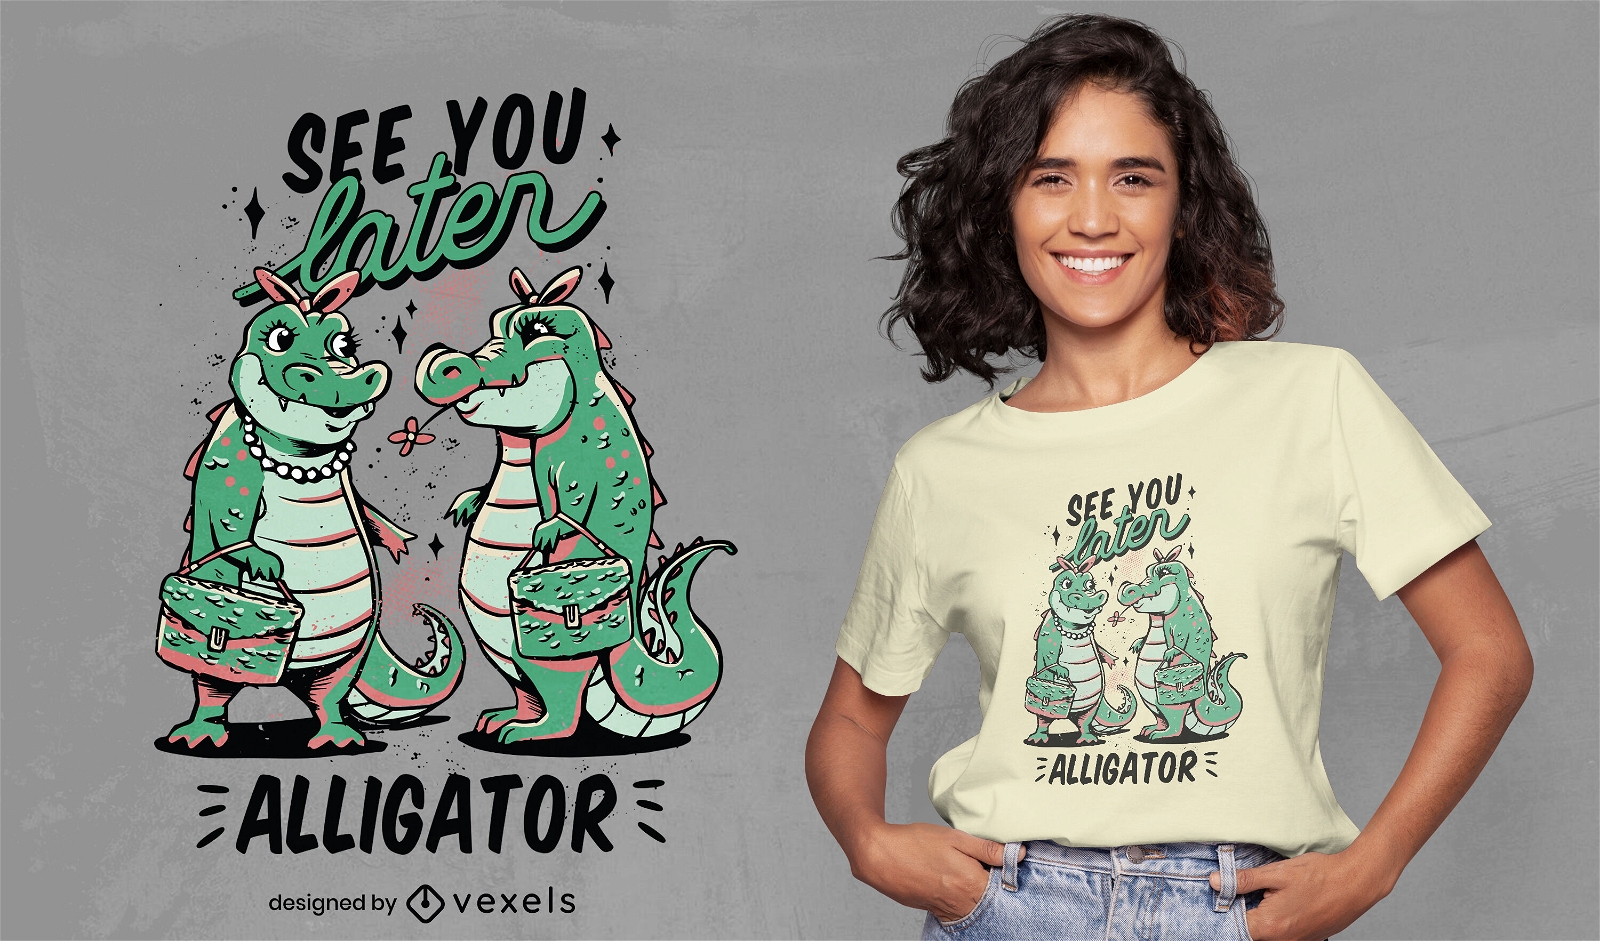 Lovely alligators quote t-shirt design